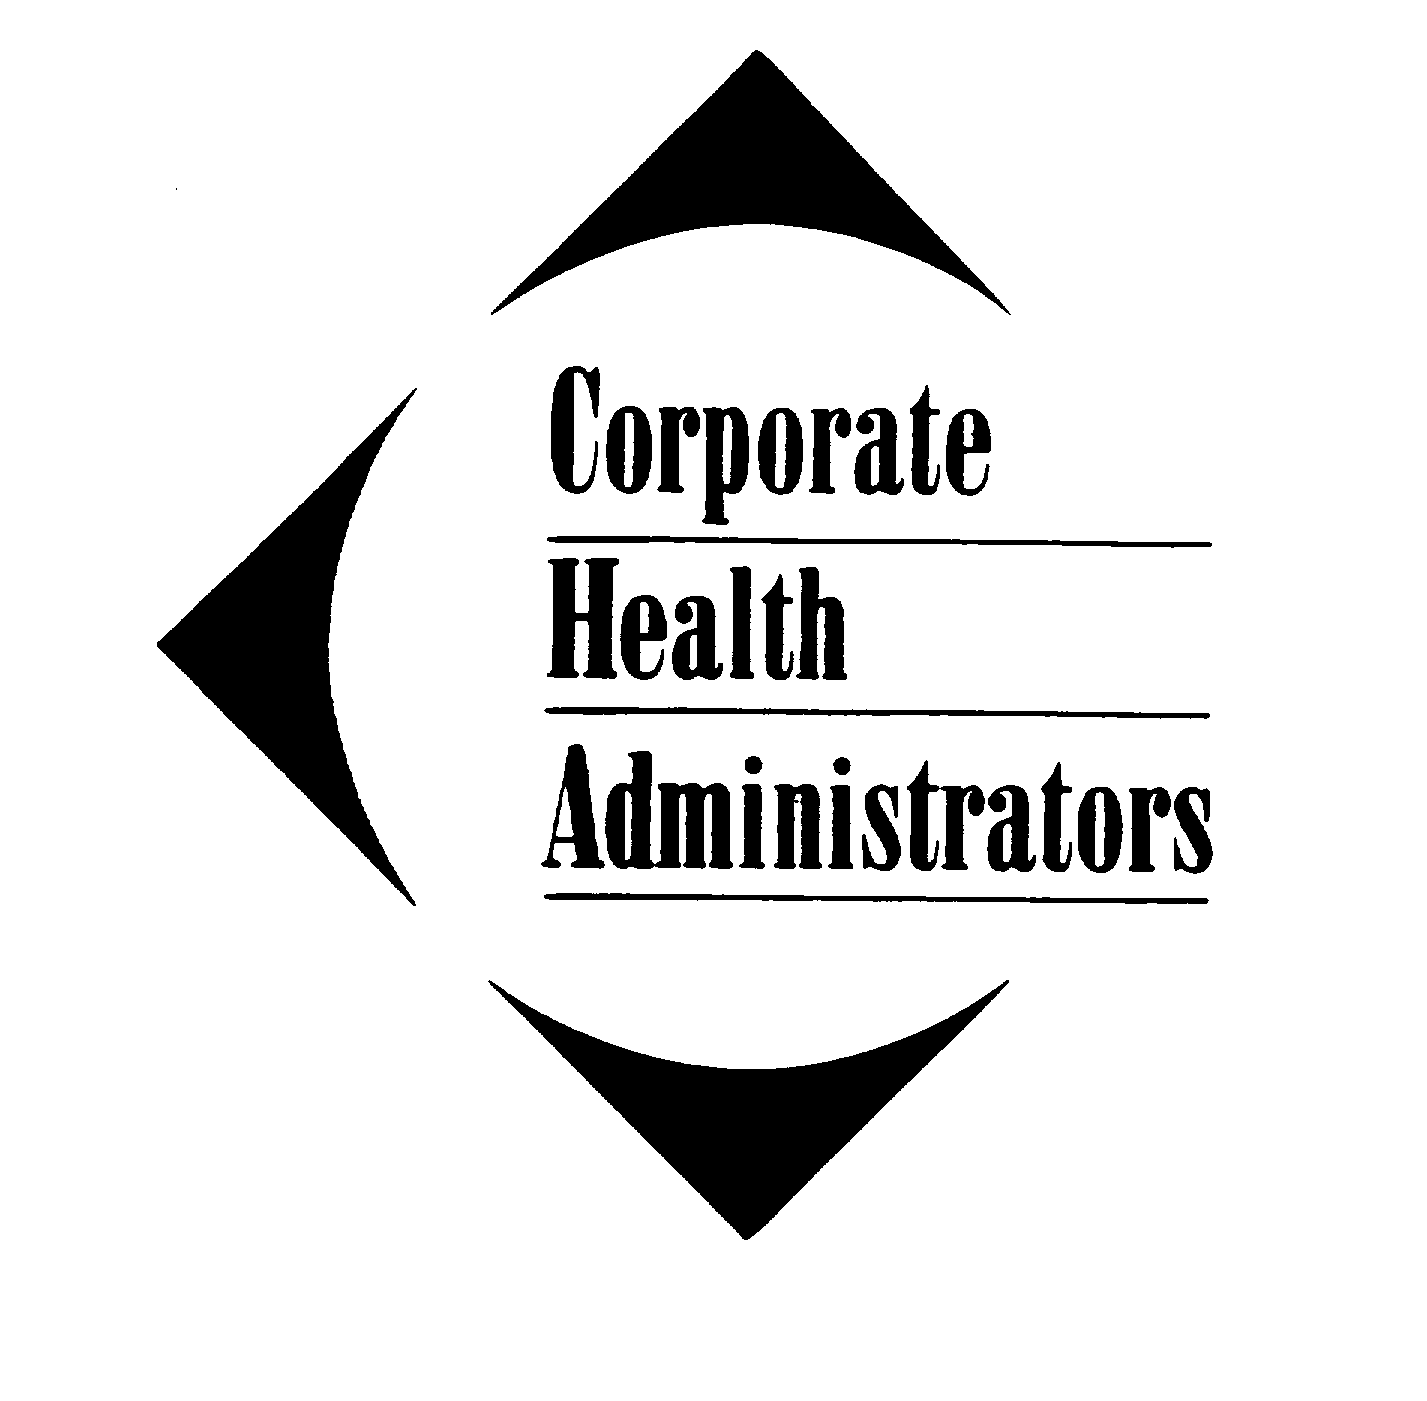  CORPORATE HEALTH ADMINISTRATORS